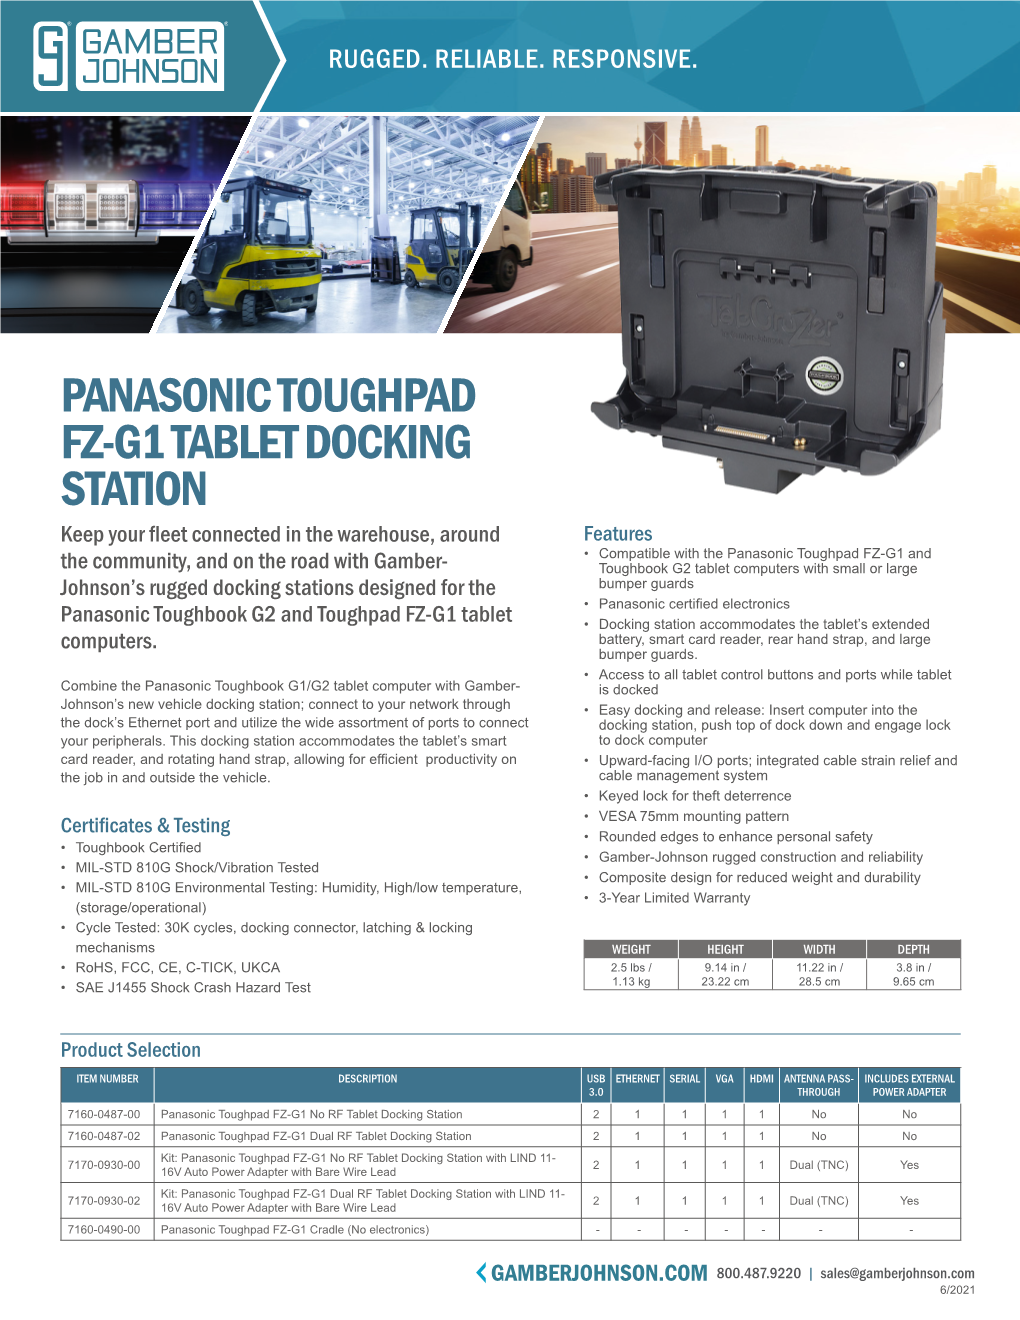 Panasonic Toughpad Fz-G1 Tablet Docking Station